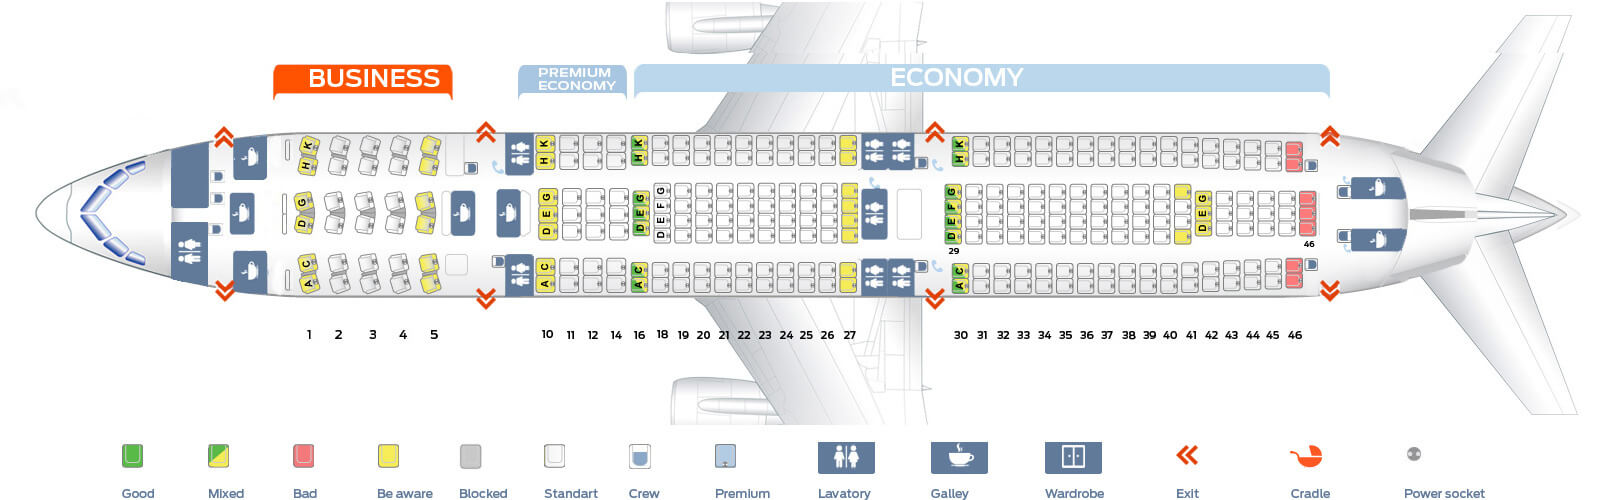 Lufthansa Airbus A340-300 seat map